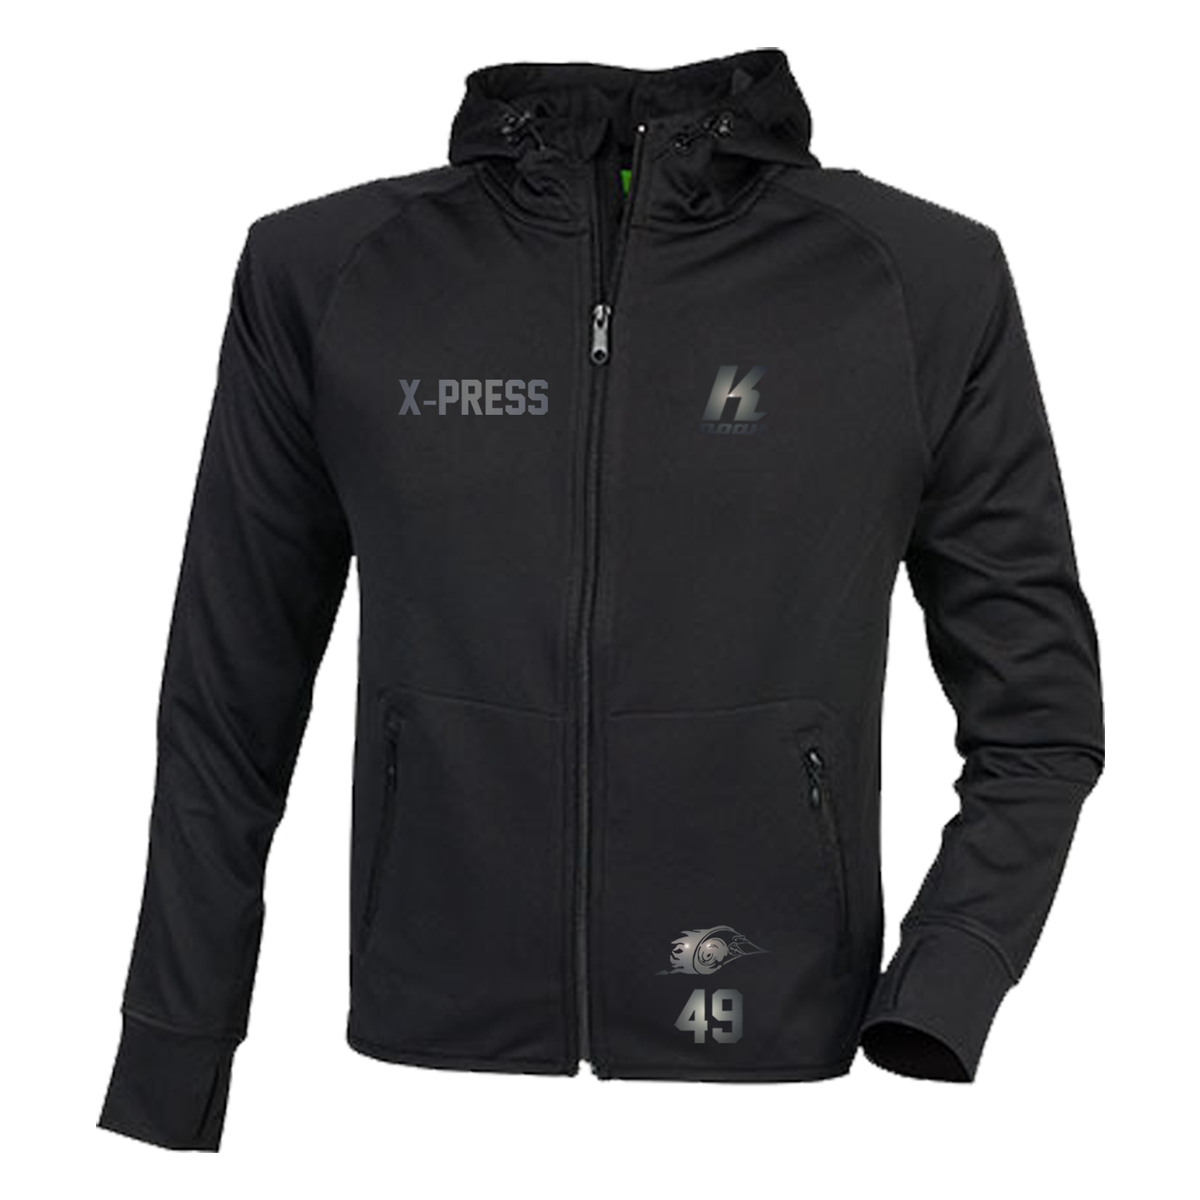 X-Press "Blackline" Zip Hoodie TL550 with Playernumber or Initials